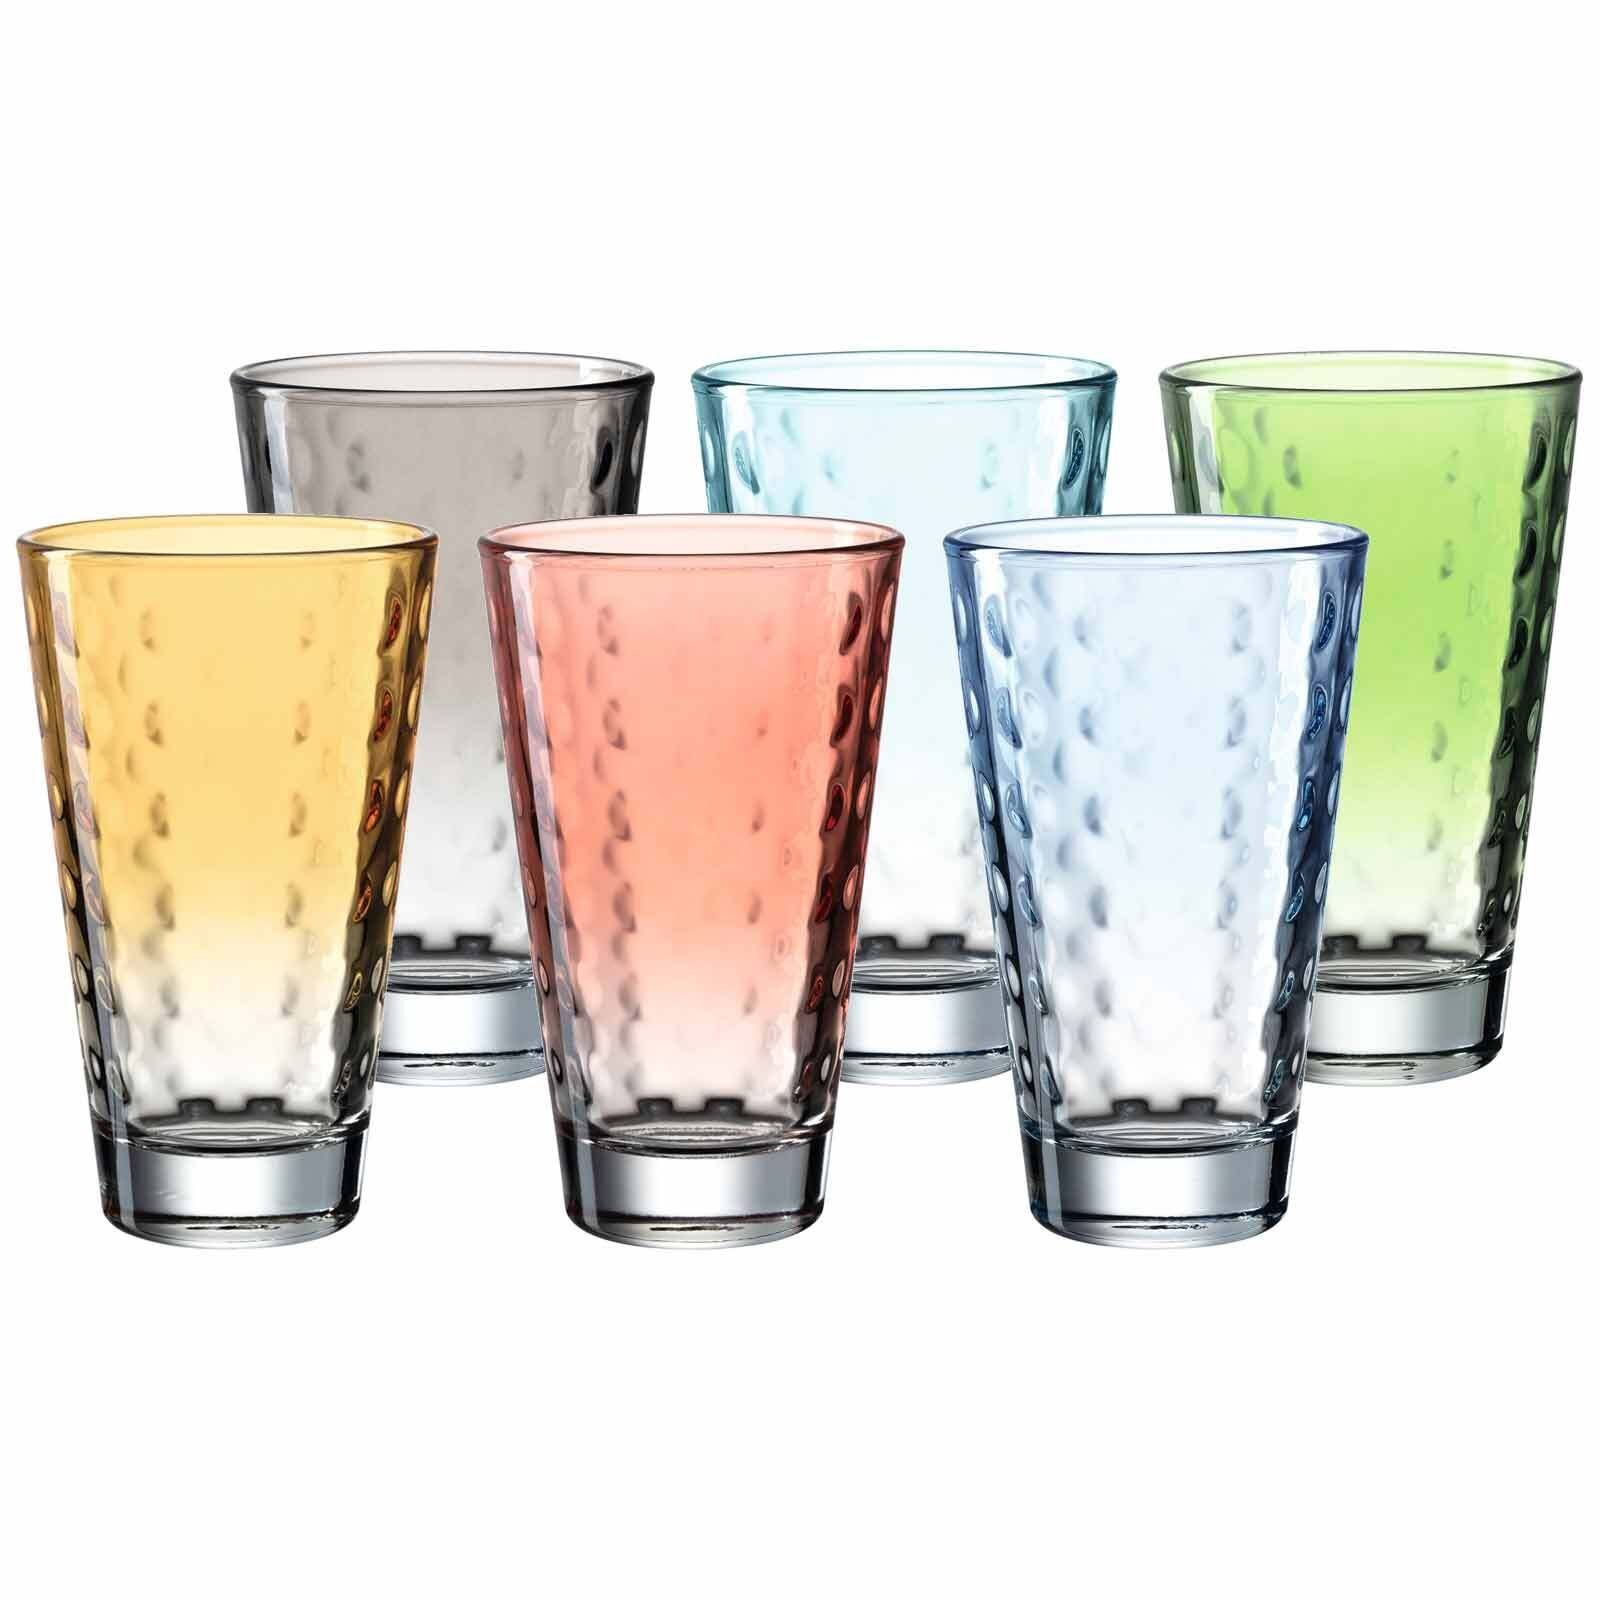 LEONARDO Glas Optic Trinkgläser 300 ml 6er Set, Glas, 6 trendige  pastellfarbige Trinkgläser OPTIC von Leonardo